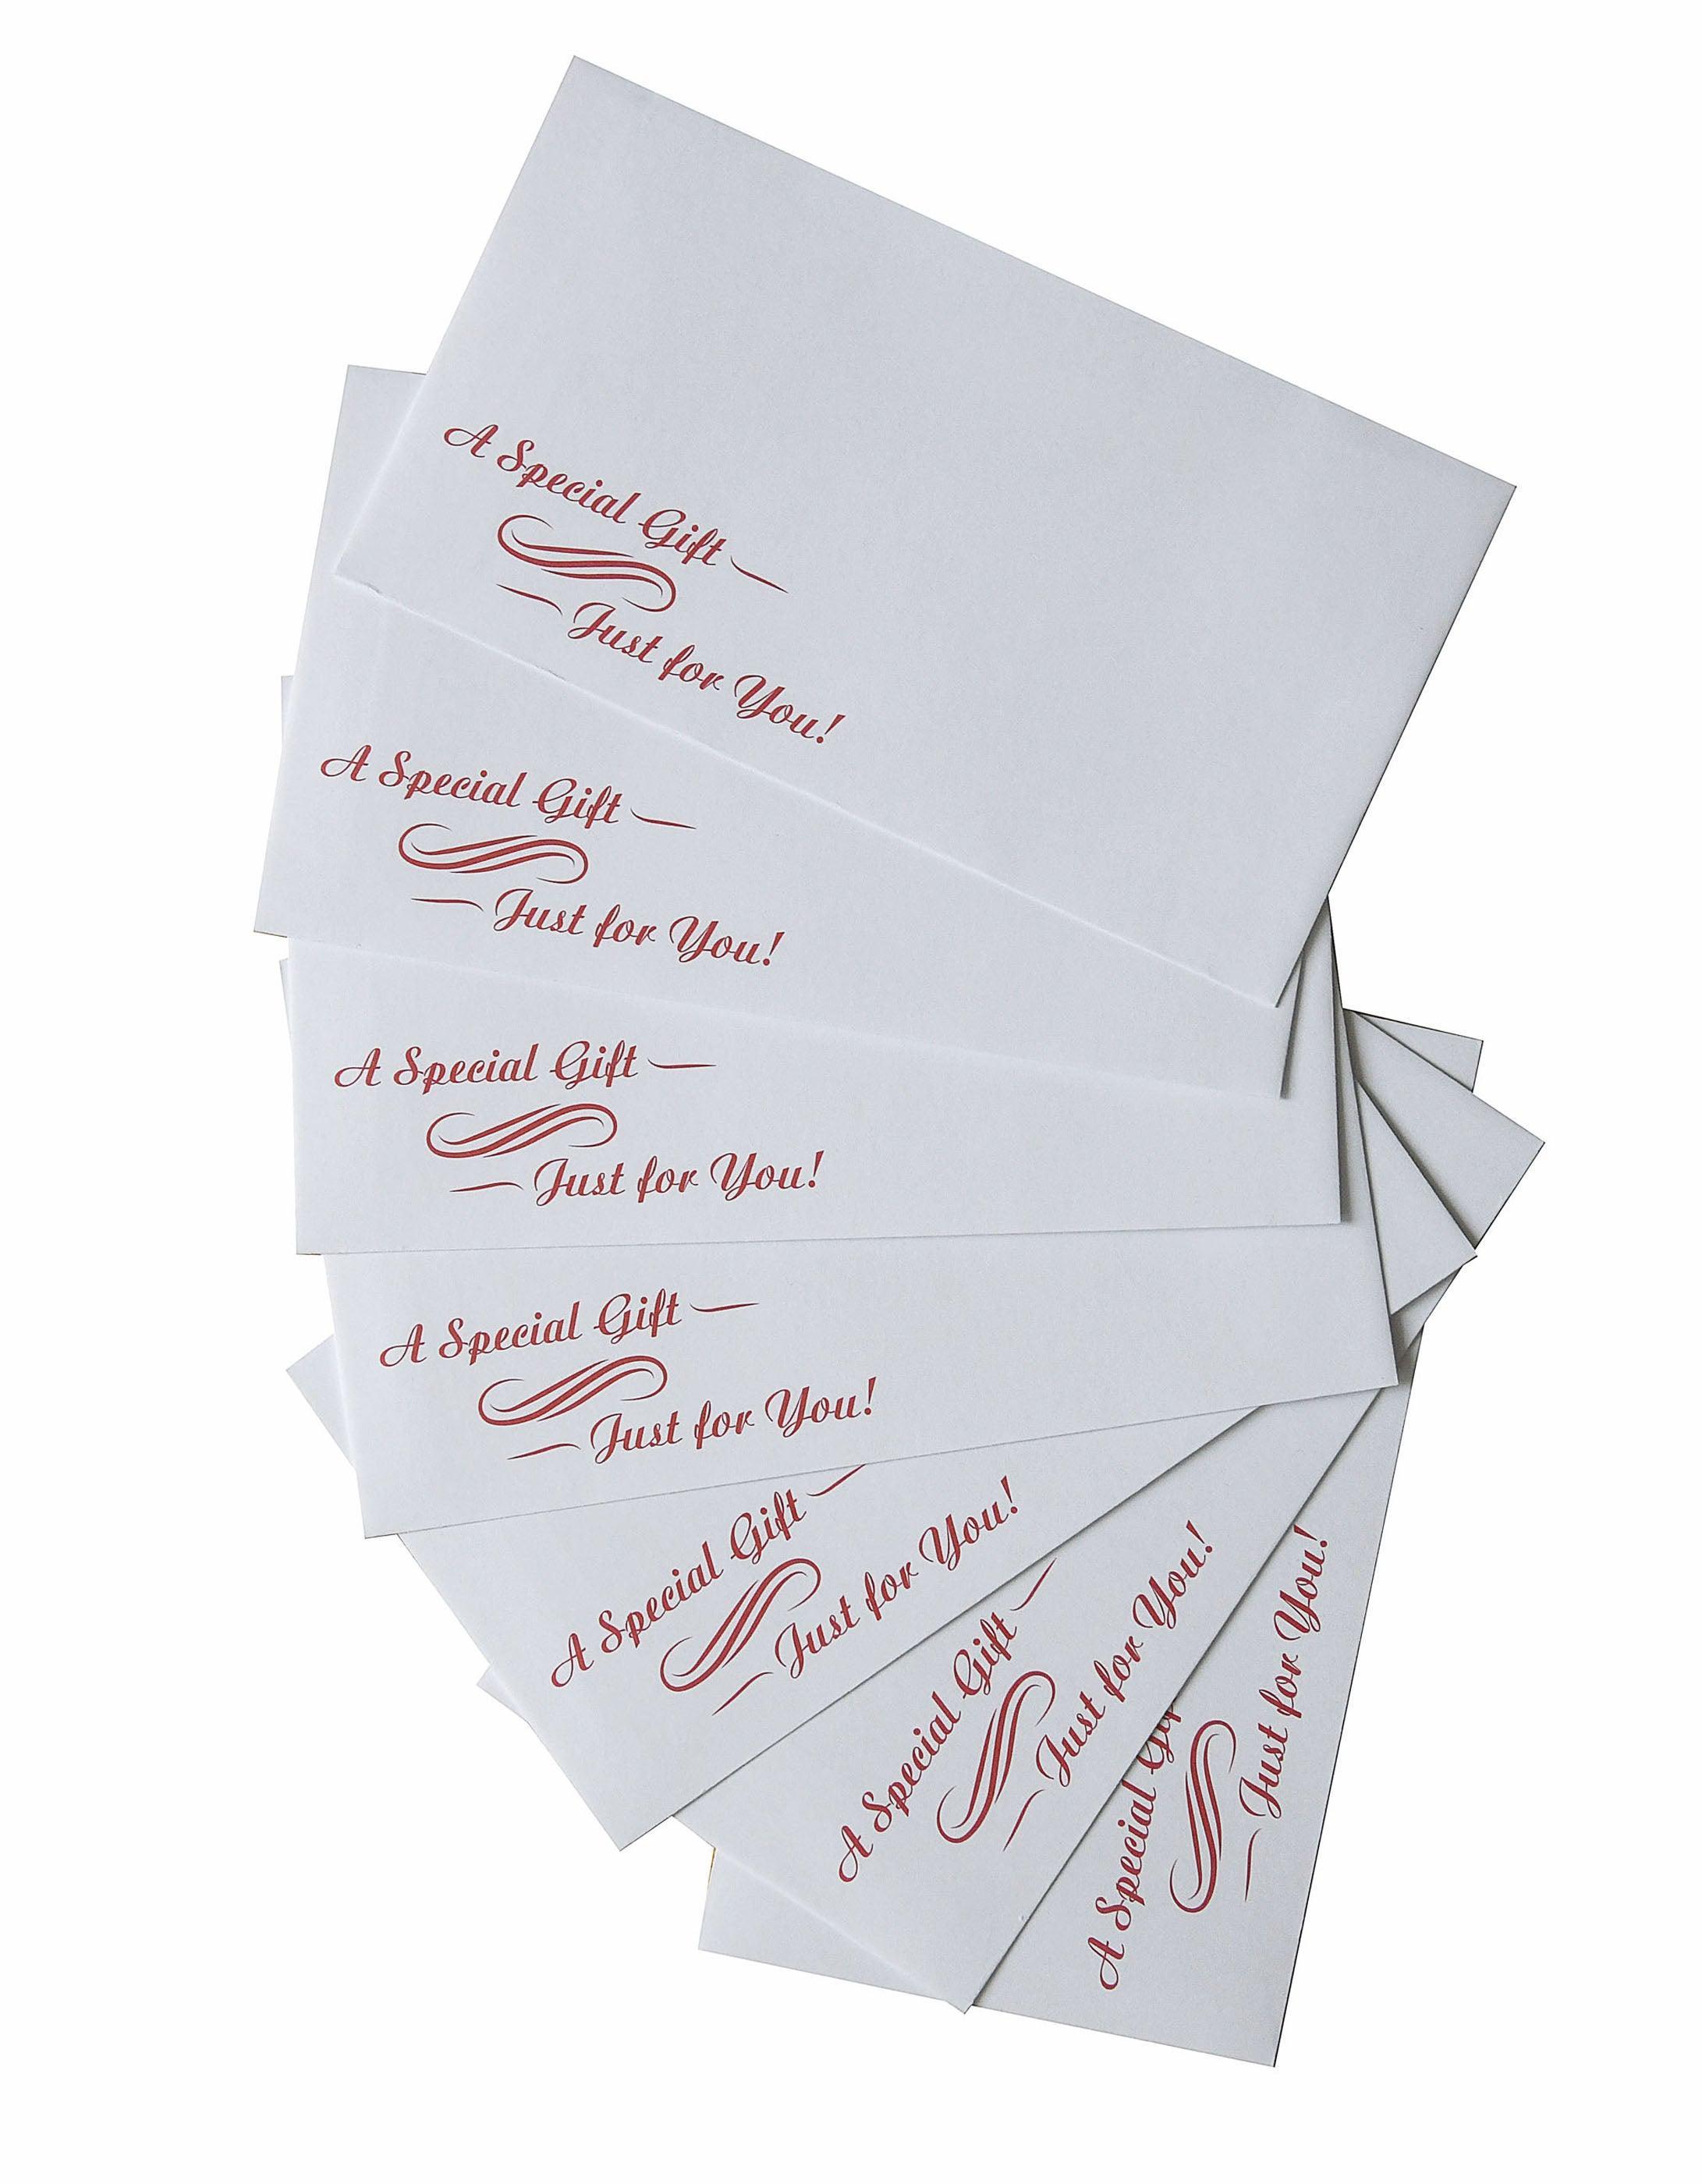 Cash Envelopes (3.75 x 6.75) - 50 Qty | Perfect The Holidays, Birthdays, Graduations, Company Bonuses, Gifts, Money and More! - SJPrinter 